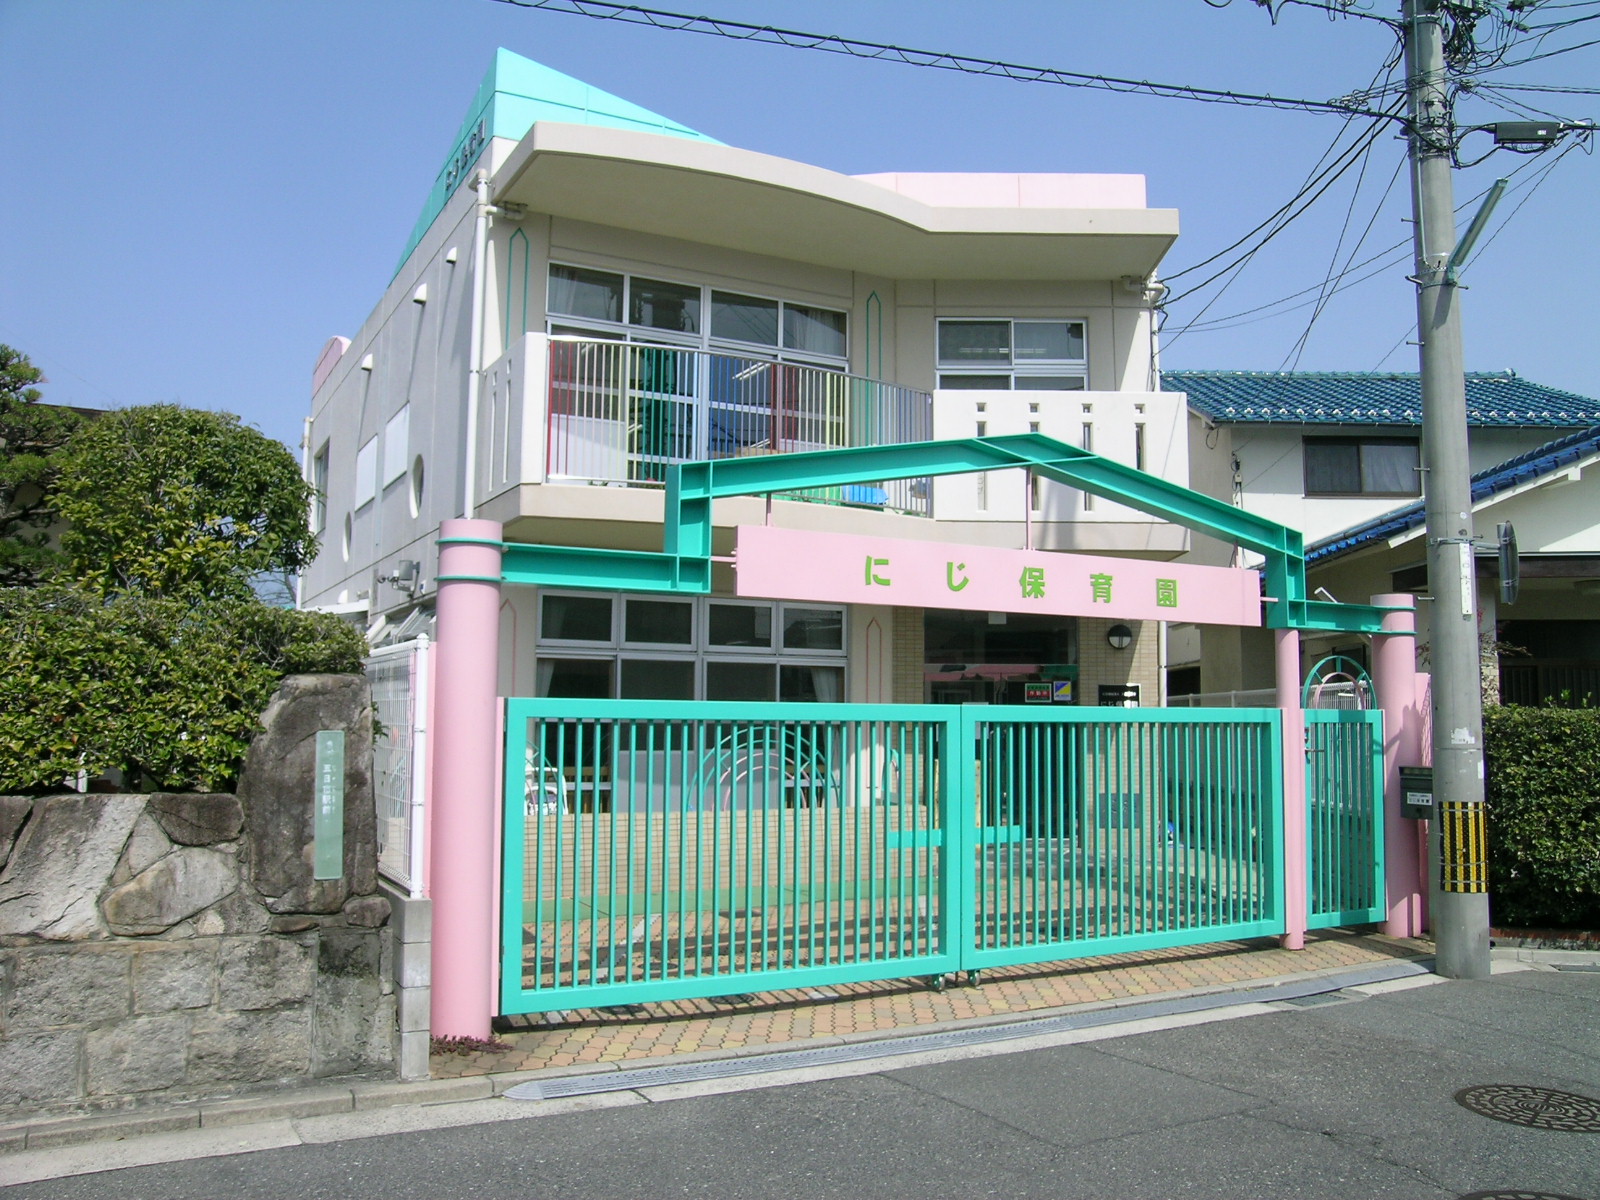 kindergarten ・ Nursery. Rainbow nursery school (kindergarten ・ 524m to the nursery)